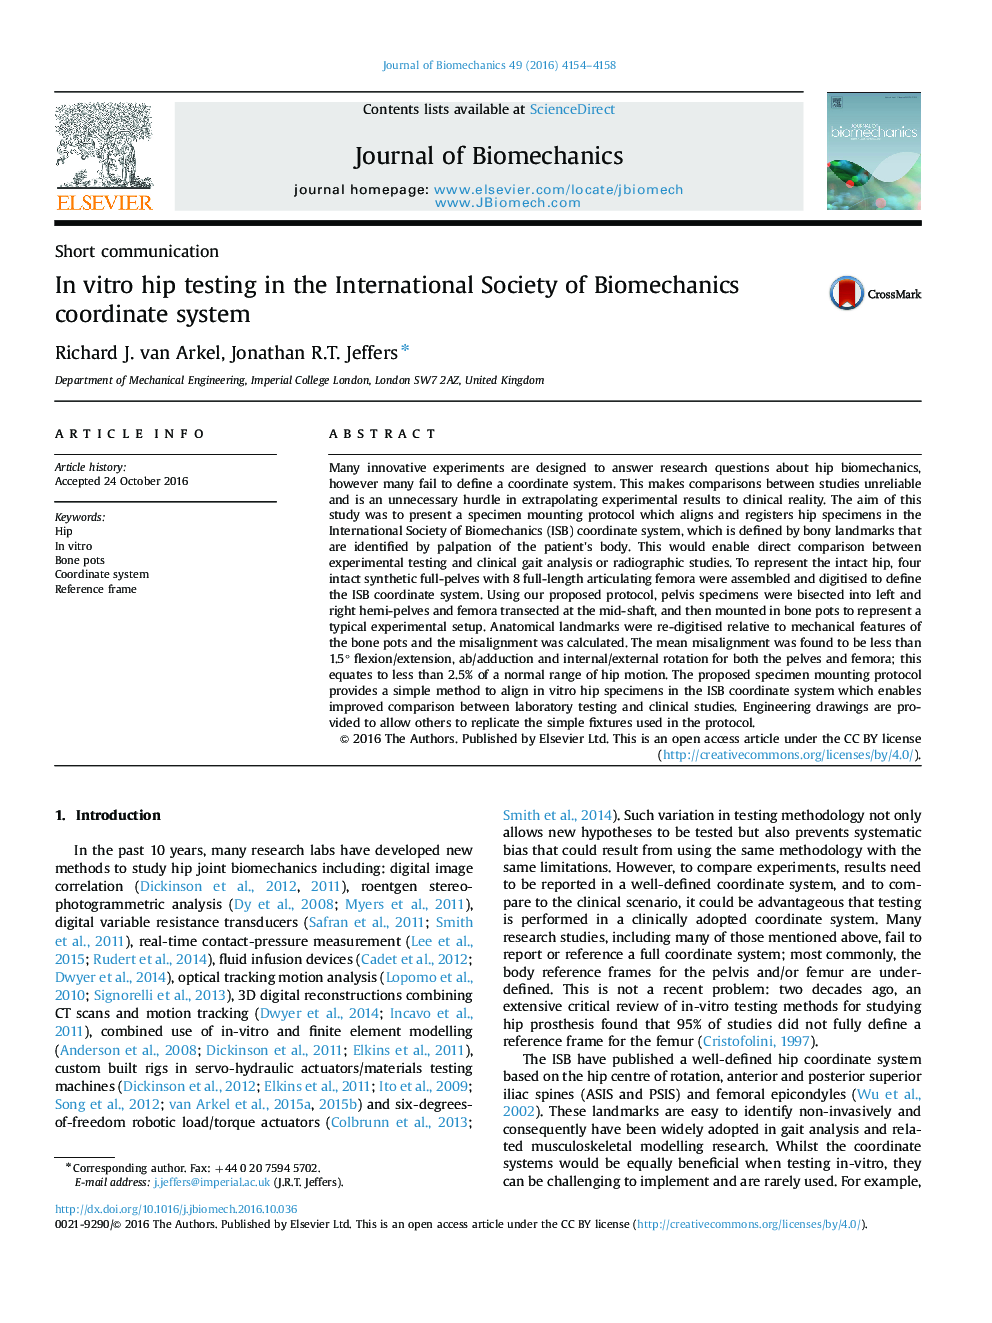 Short communicationIn vitro hip testing in the International Society of Biomechanics coordinate system